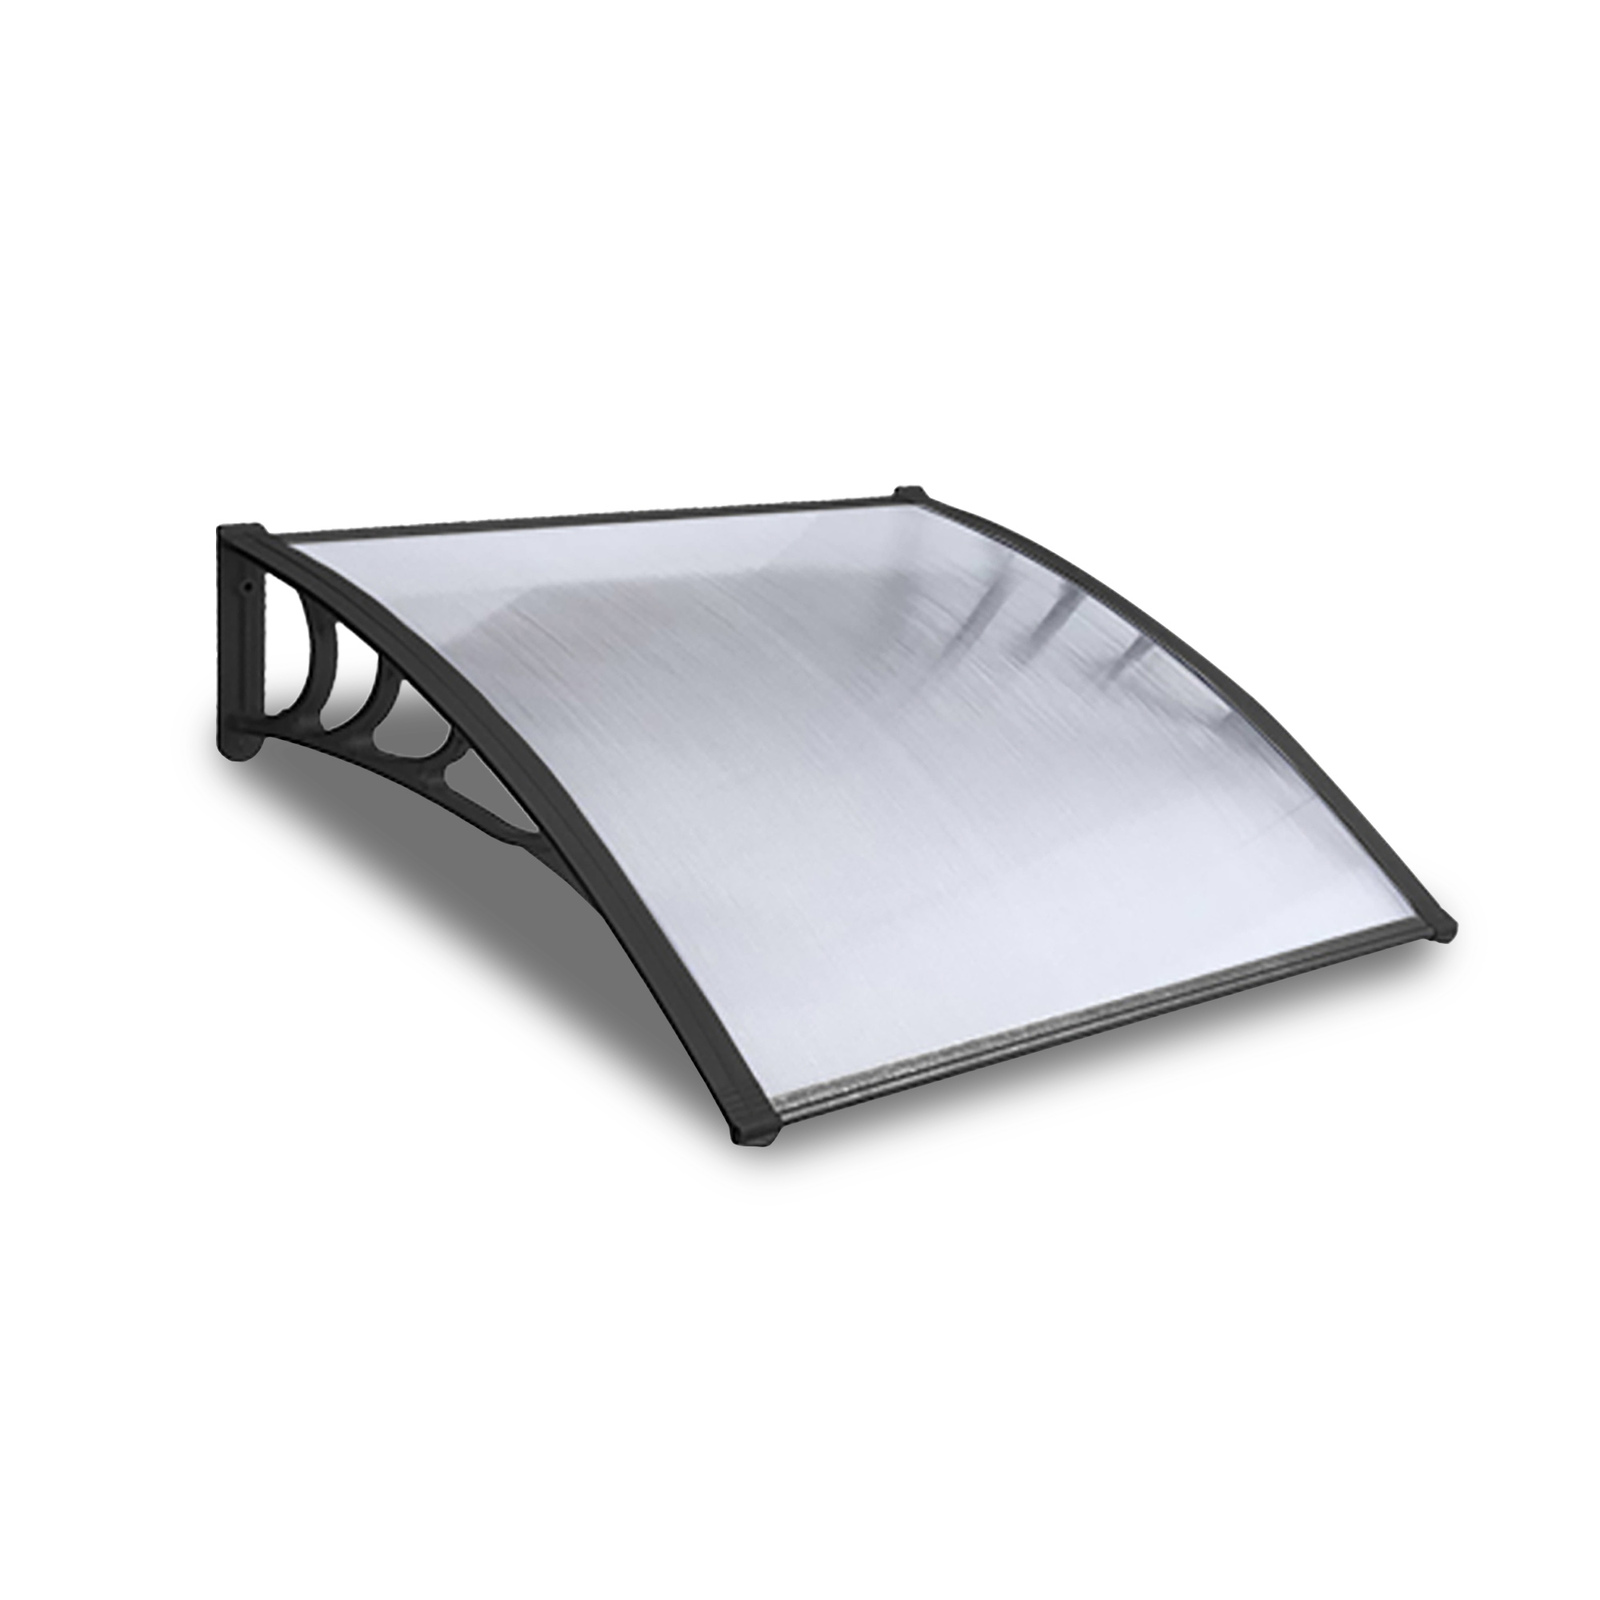 1.2 x 1M Window Door Awning Canopy Outdoor Patio UV Sun Shield Shade Waterproof Cover Rain Canopy 